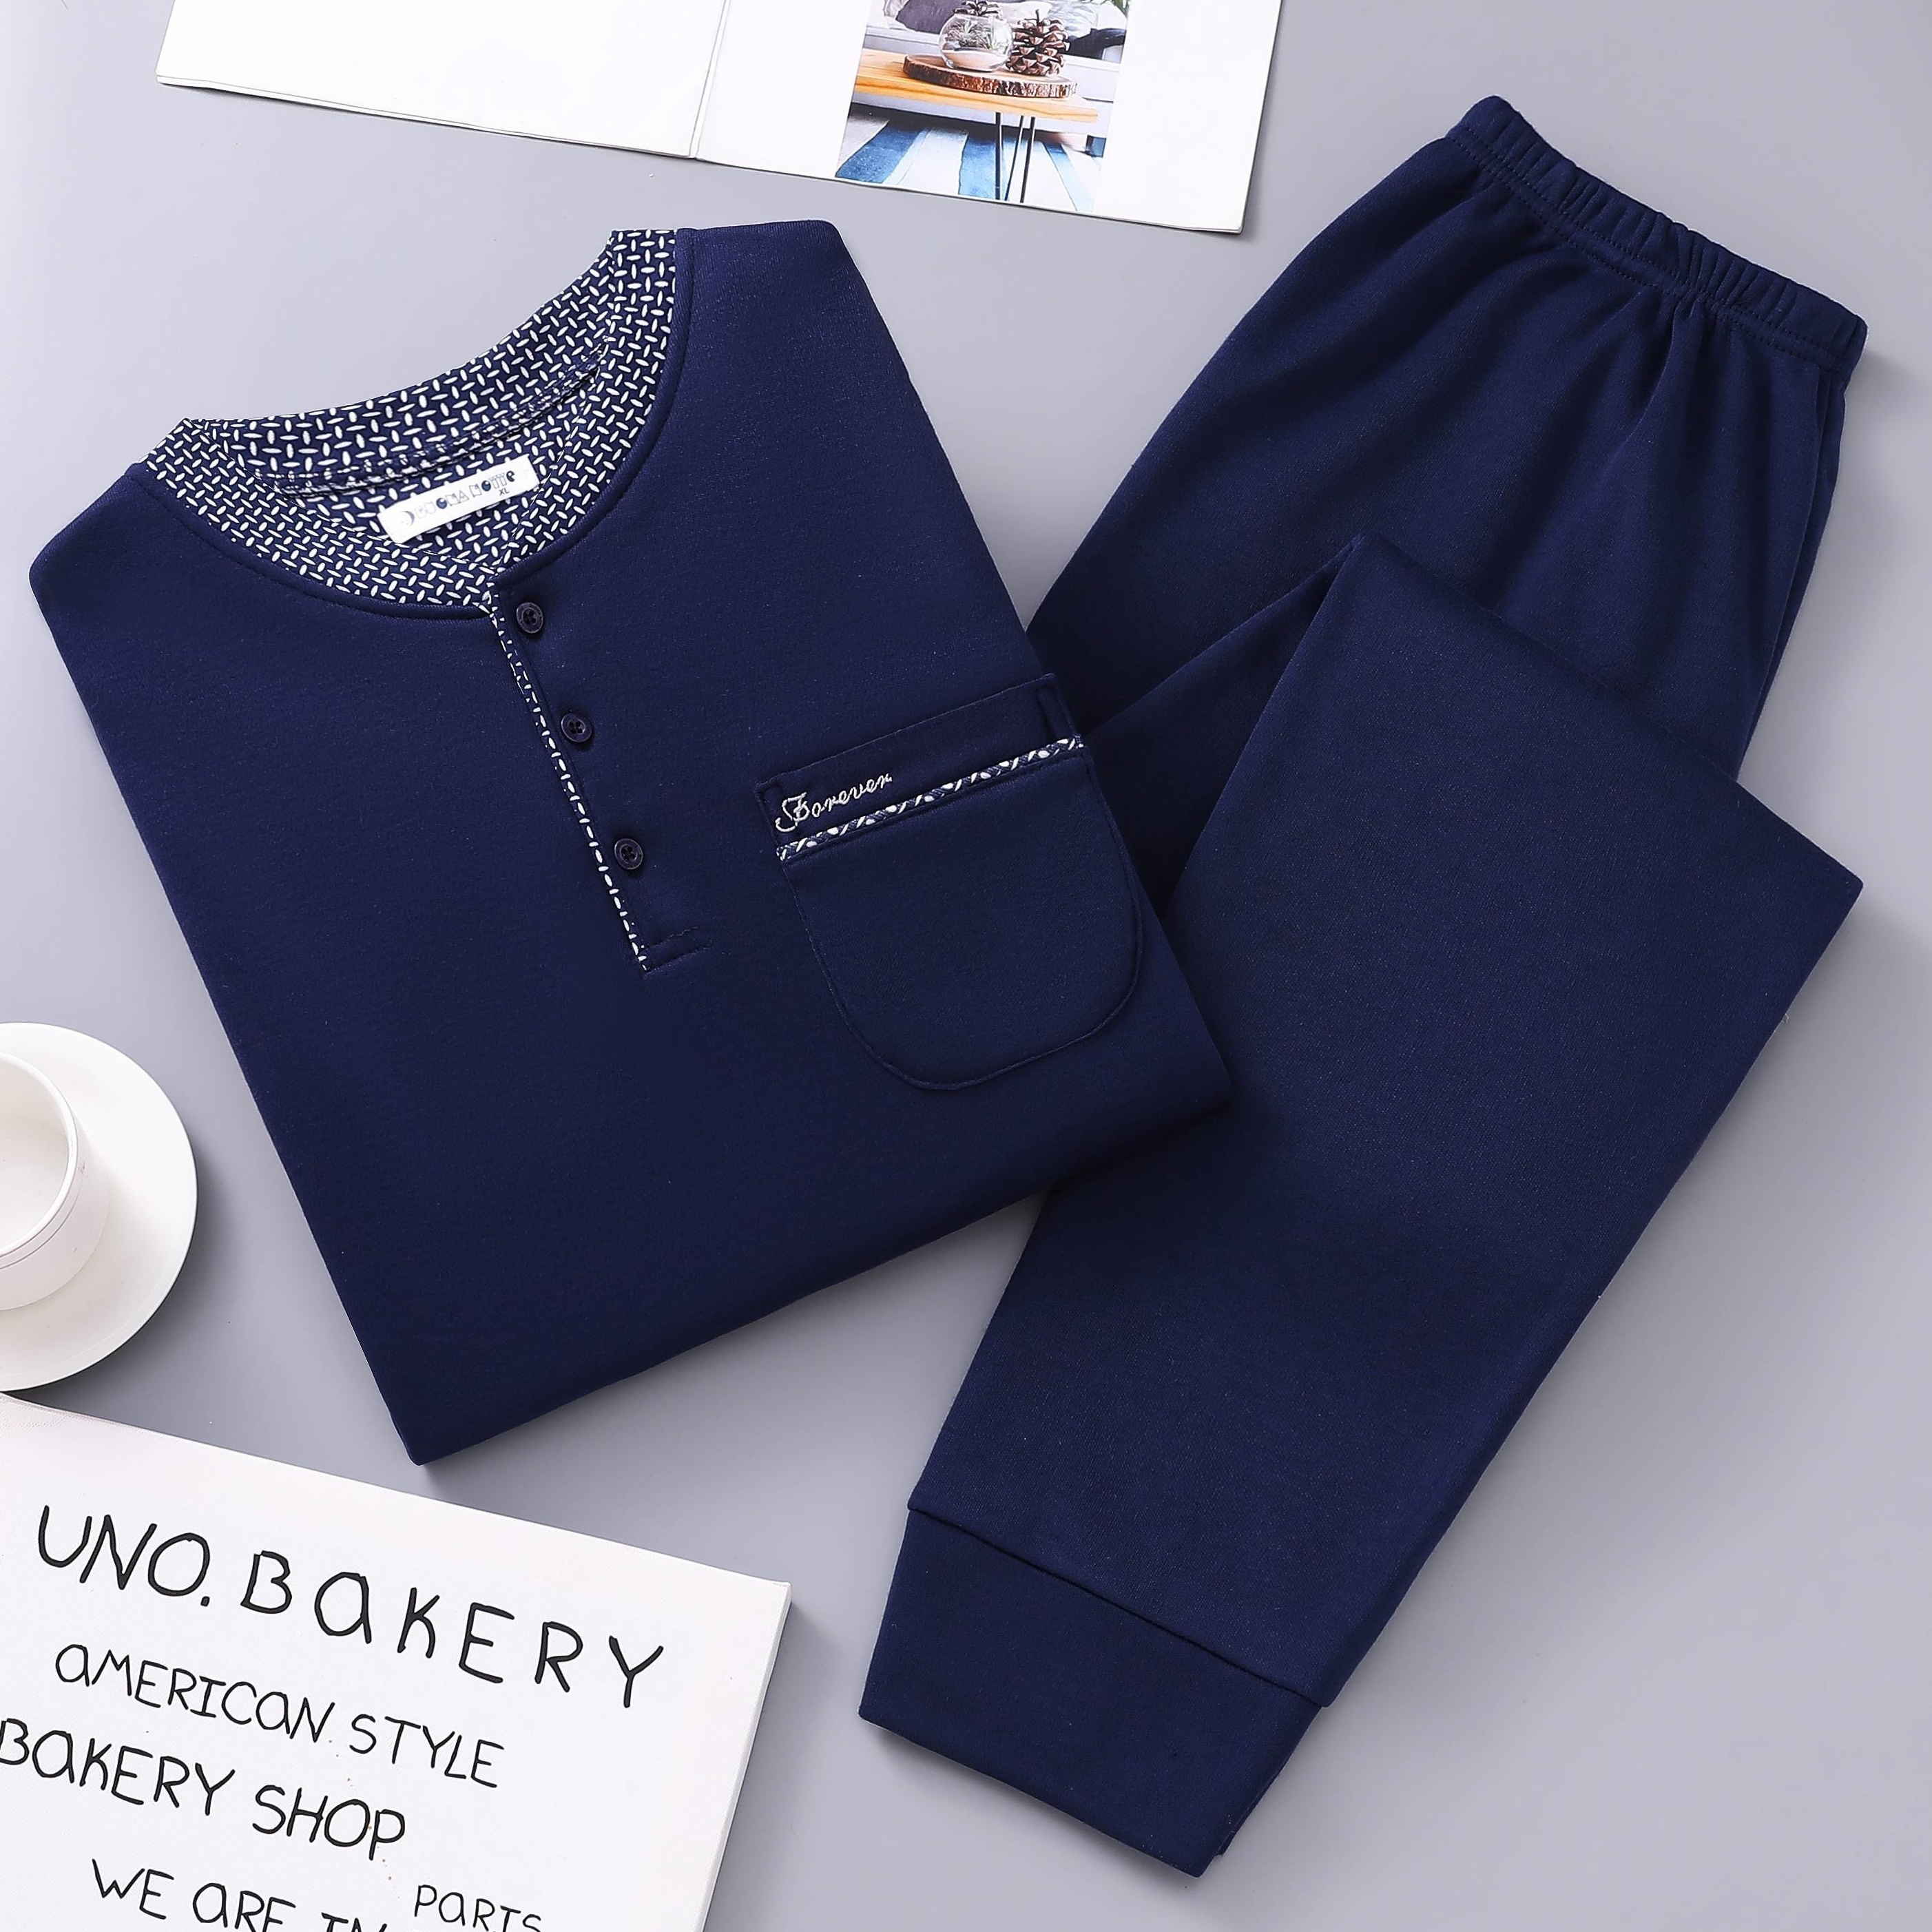 

2pcs Casual Round Neck Button Up Long Sleeves Pockets Shirts Tops & Pants Sets, Men's Comfortable Pajamas Loungewear